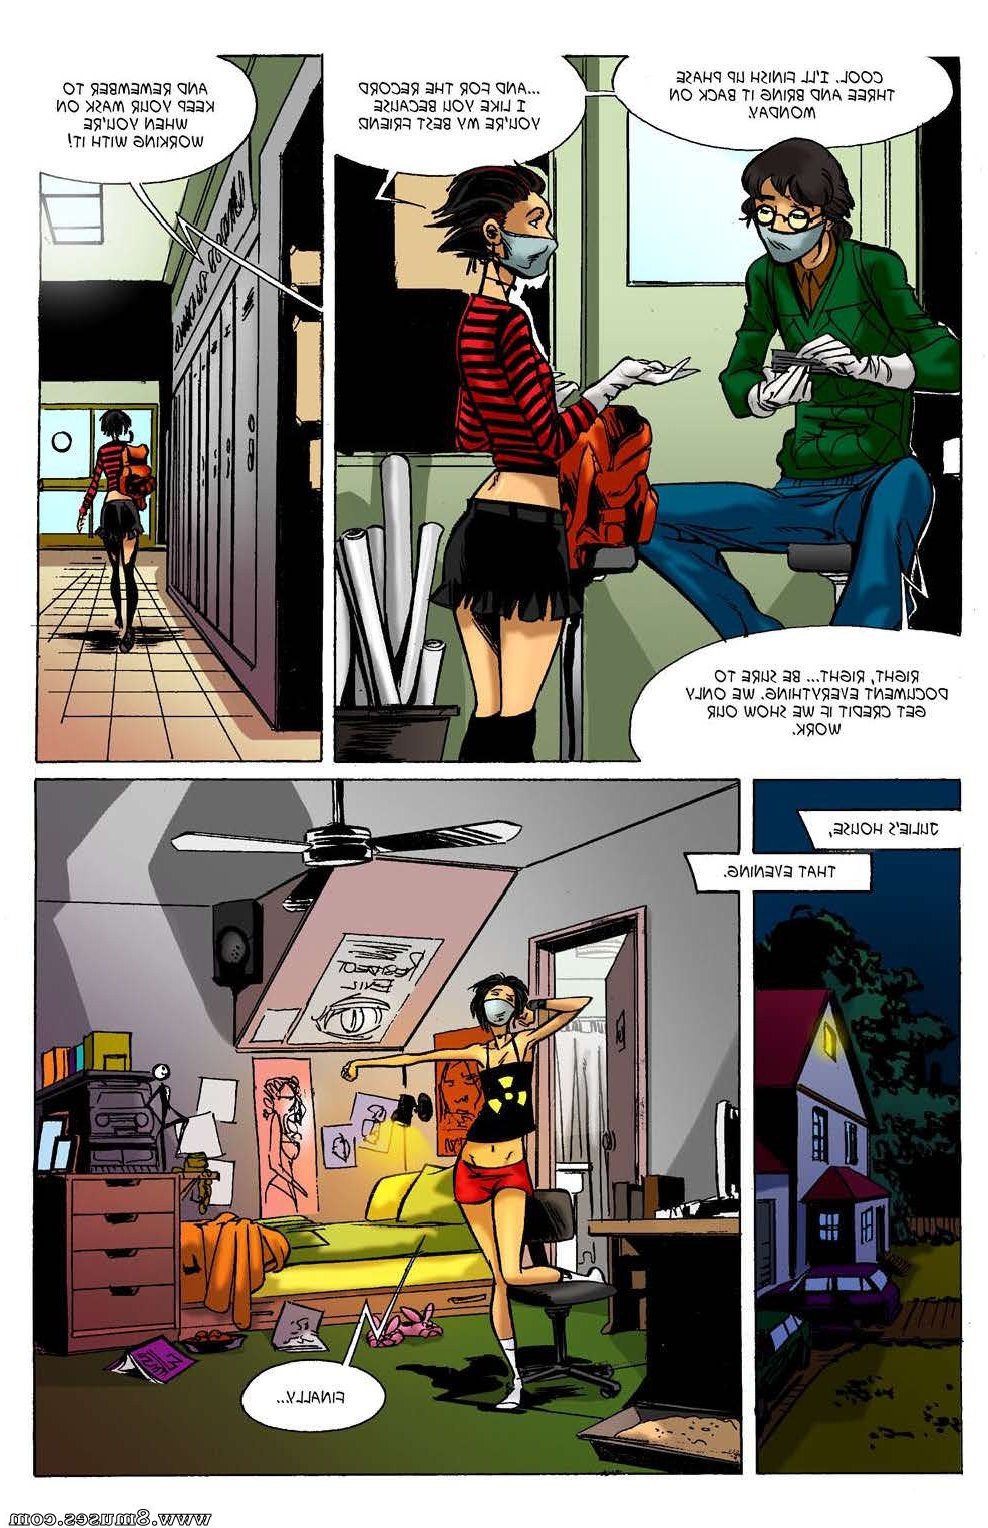 BE-Story-Club-Comics/Spore/Issue-1 Spore_-_Issue_1_5.jpg